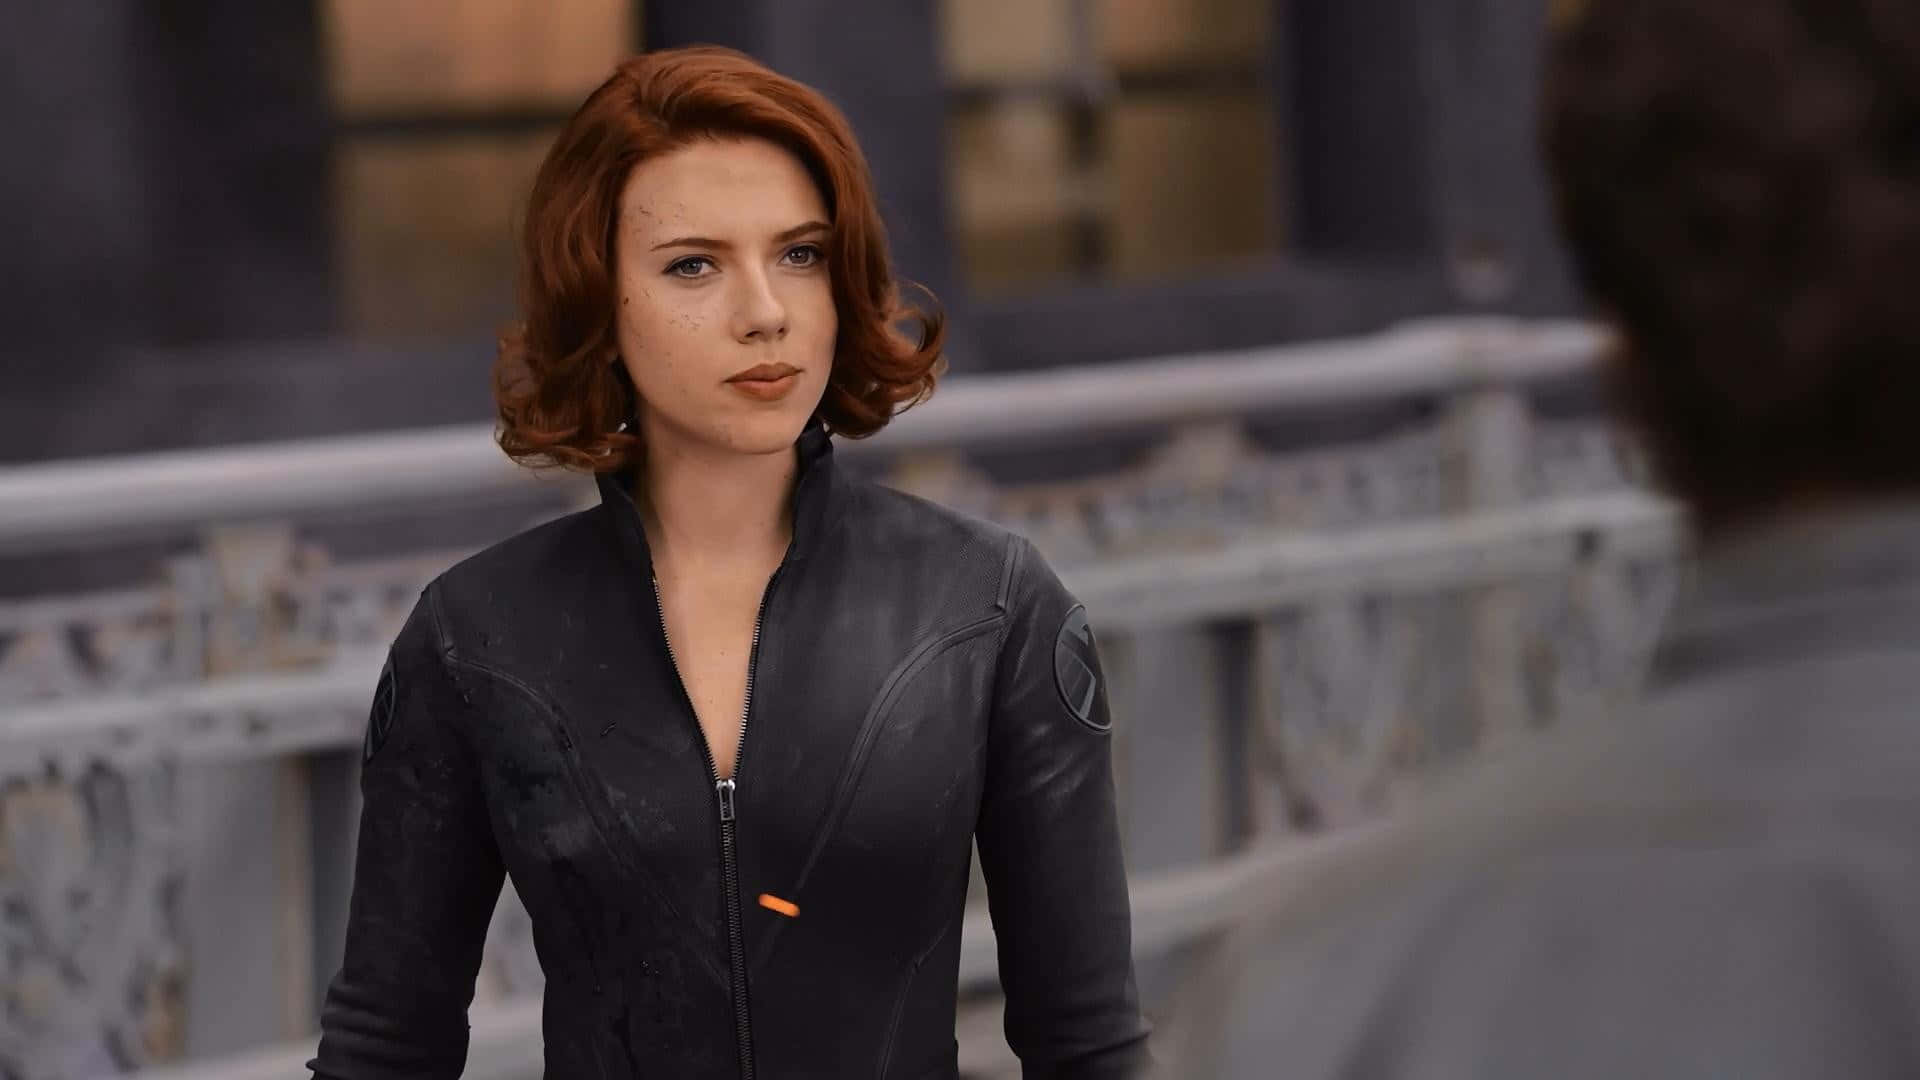 Scarlettjohansson Spiller Hovedrollen I Marvel Studios' Black Widow